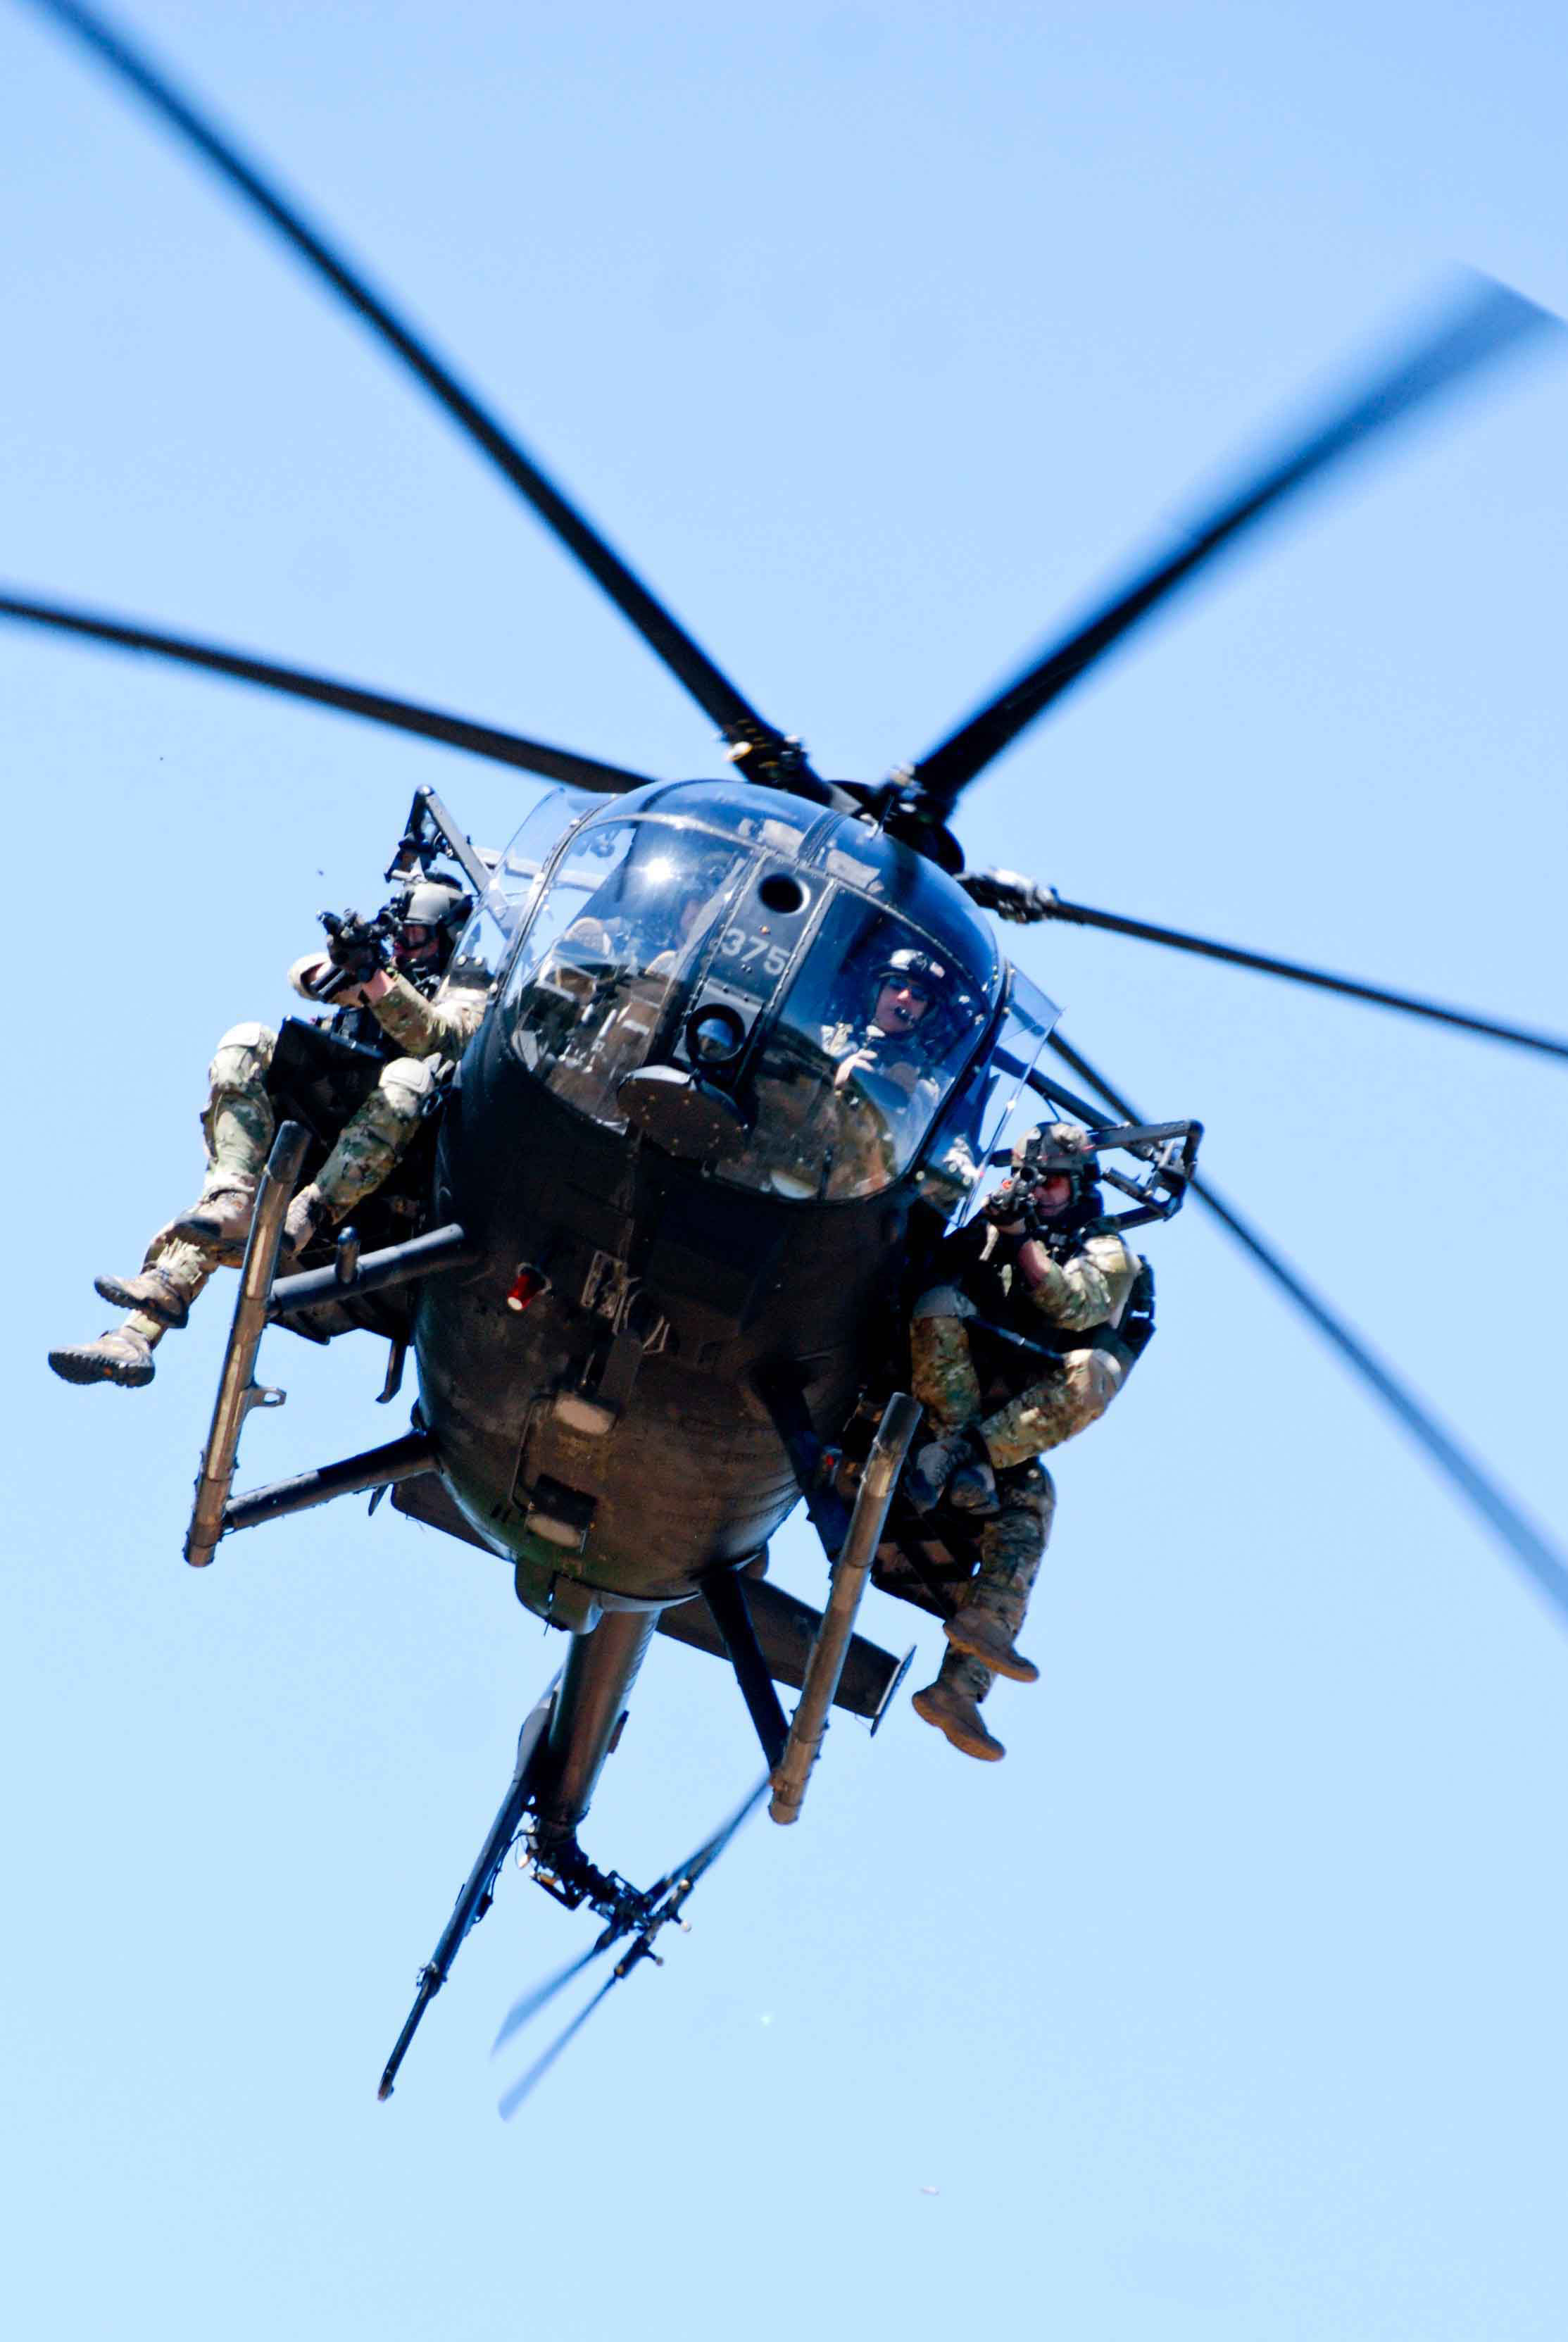 Rangers | MH-6 Little Bird Helicopter